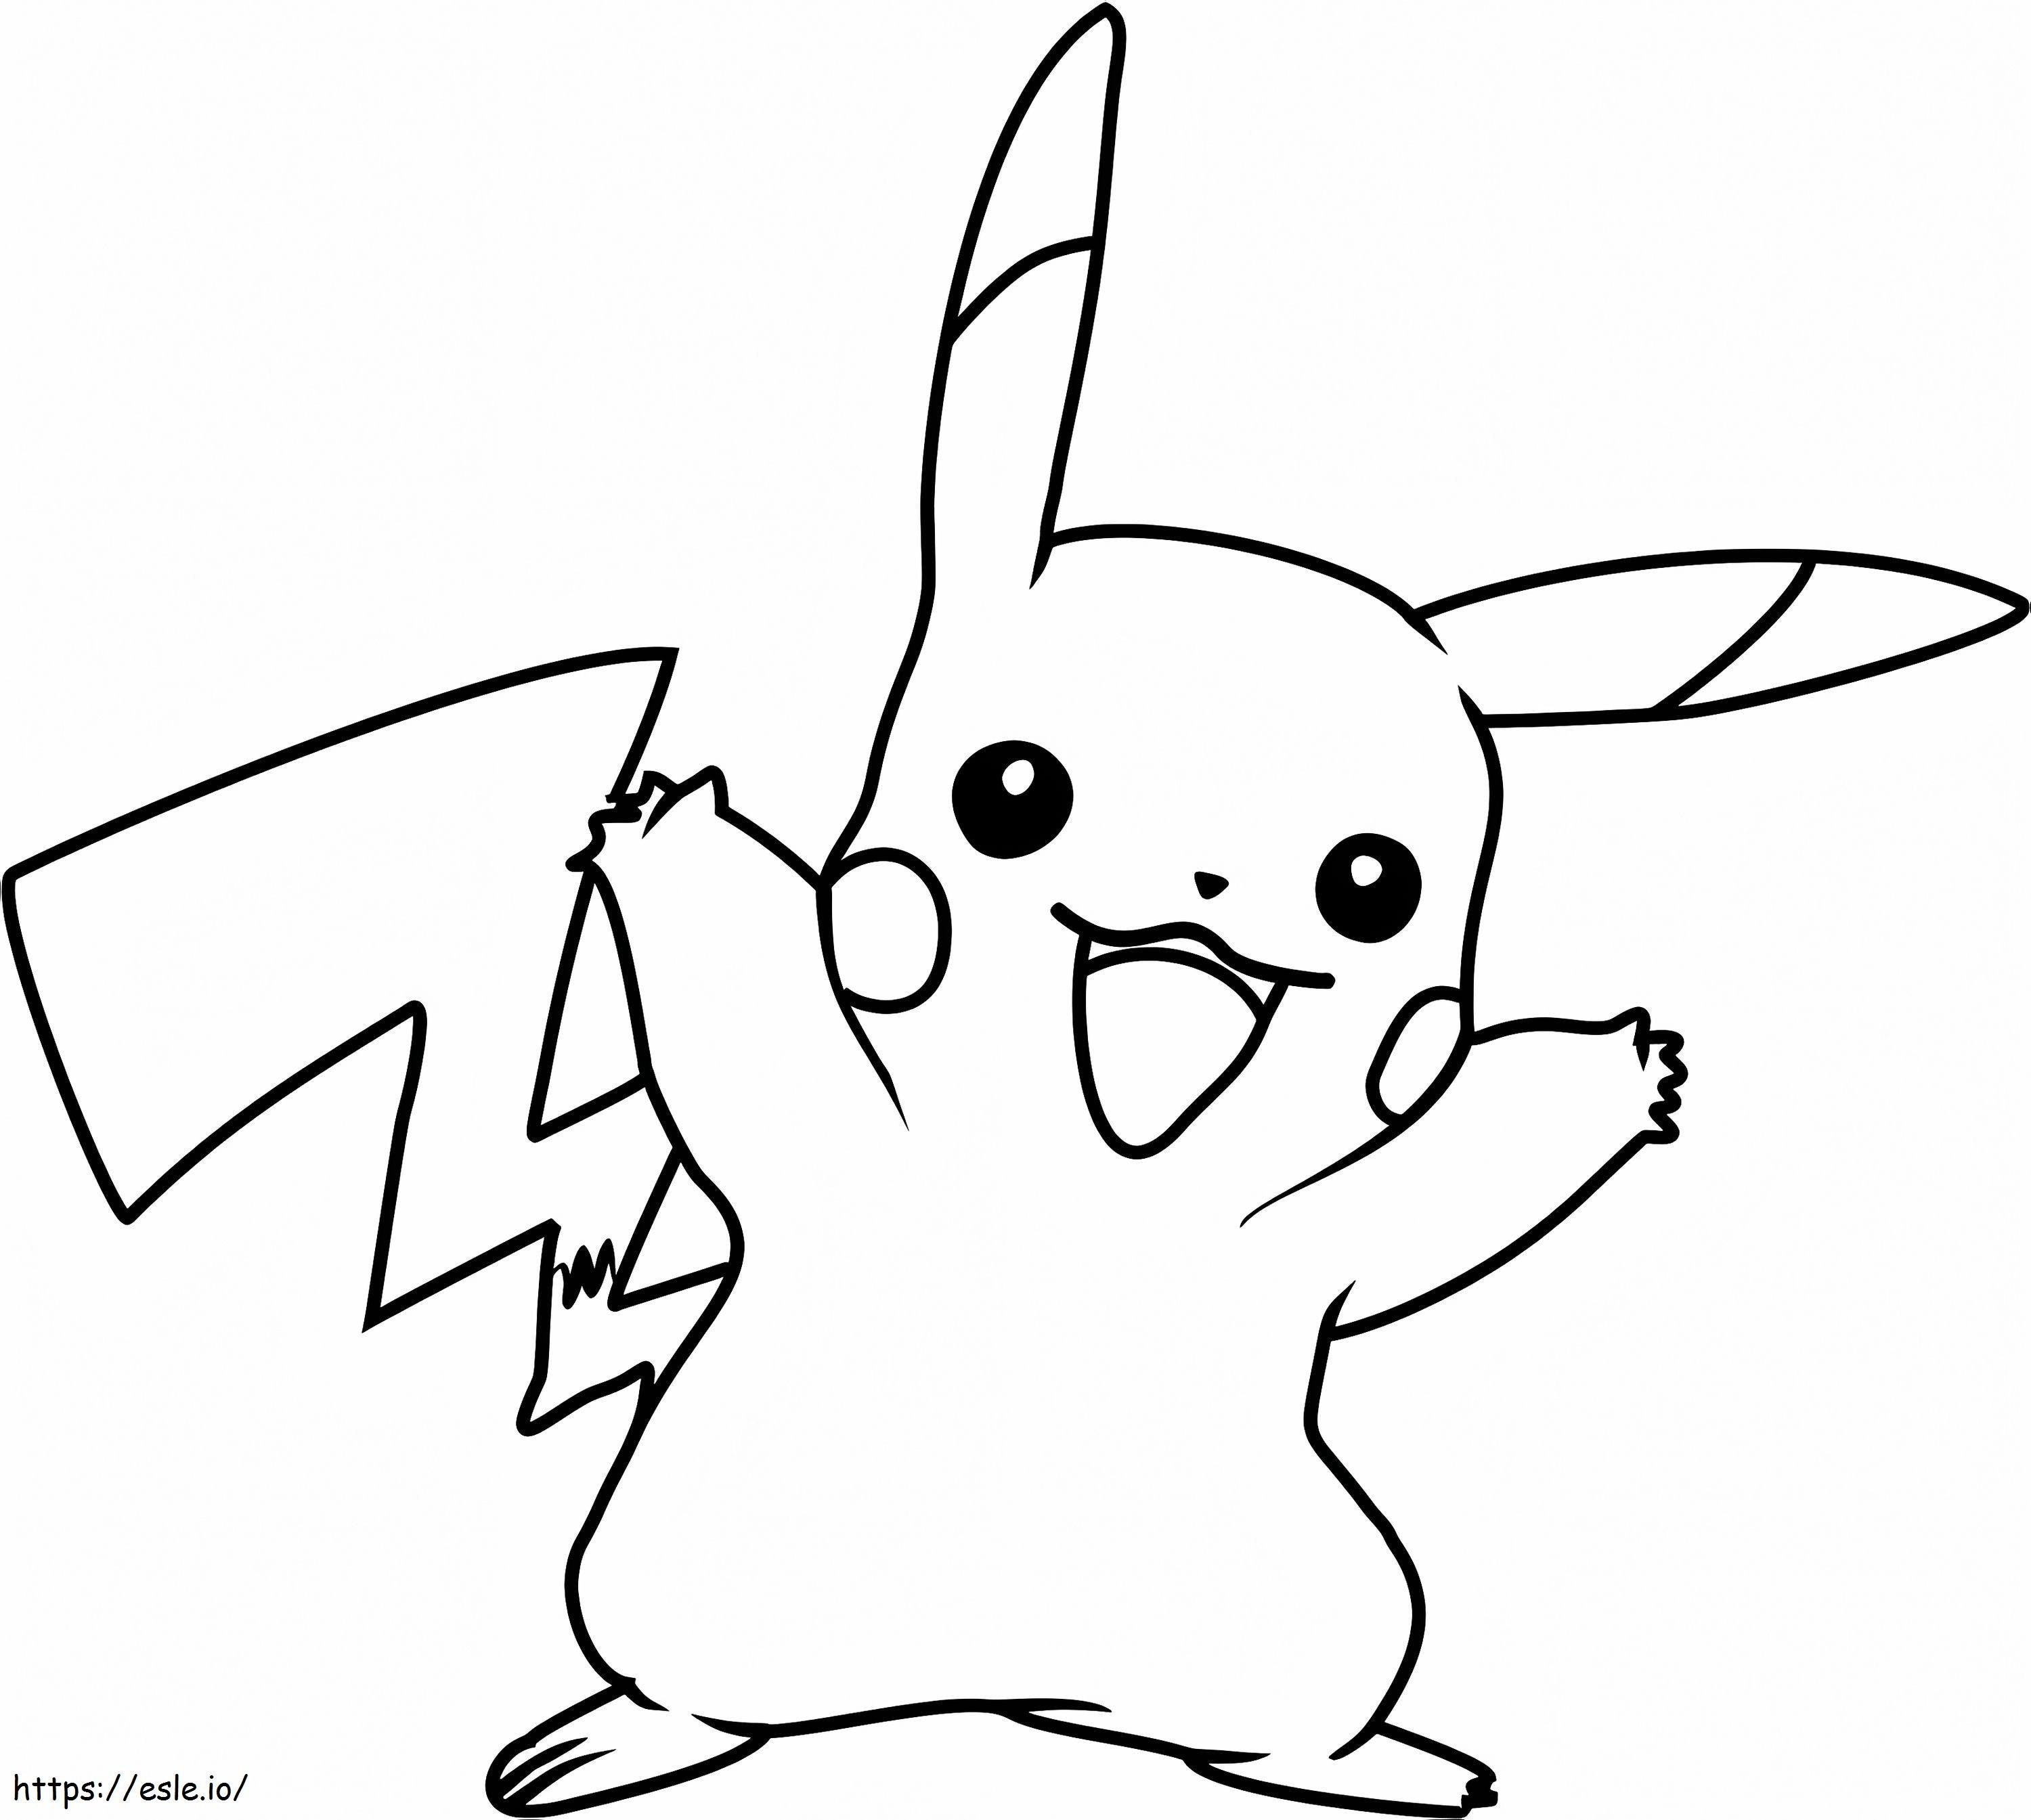 1530669716 Pikachu Pokemon A4 de colorat